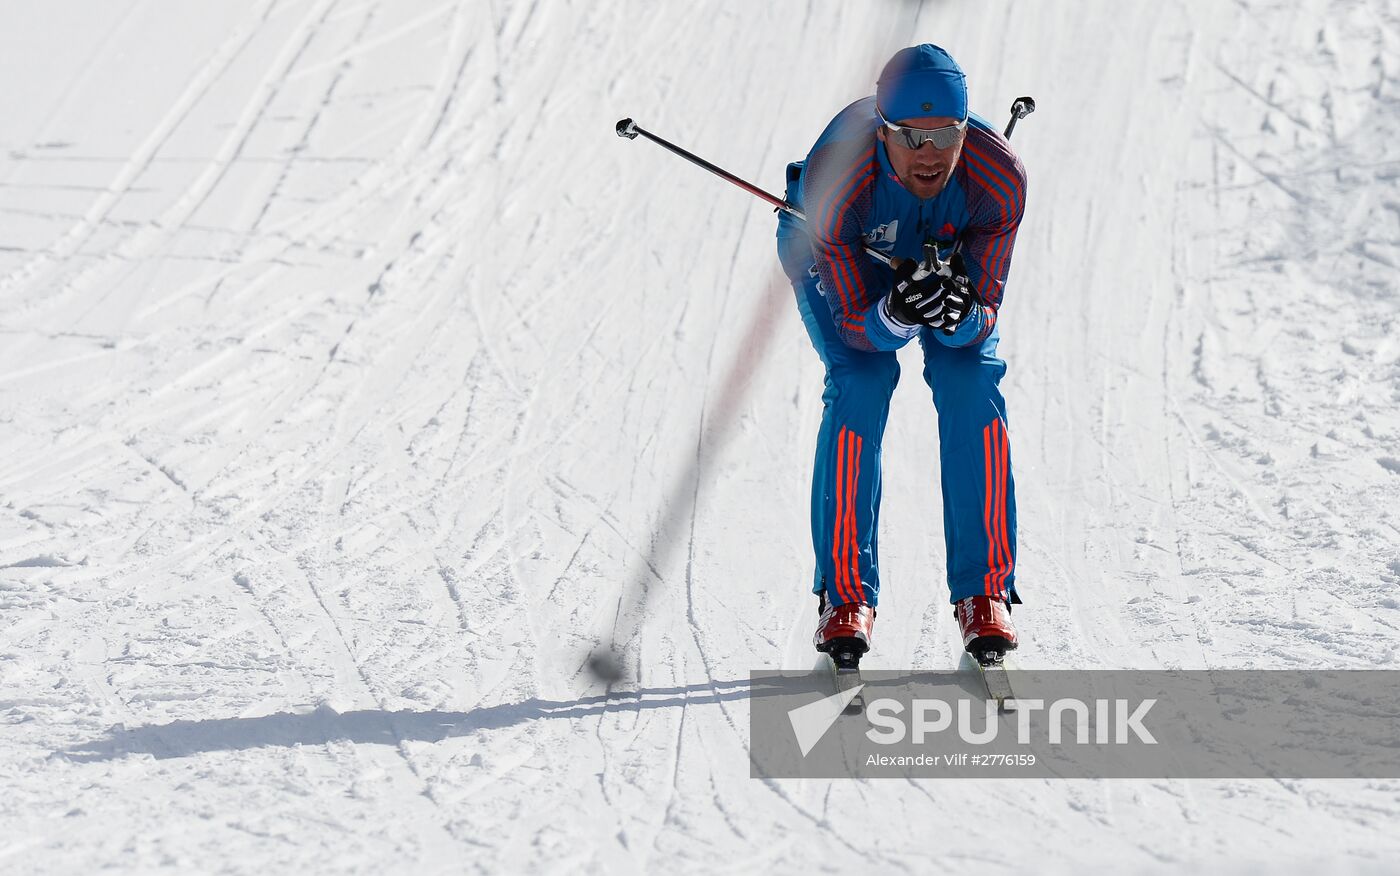 2015-16 Biathlon World Cup 6. Training session